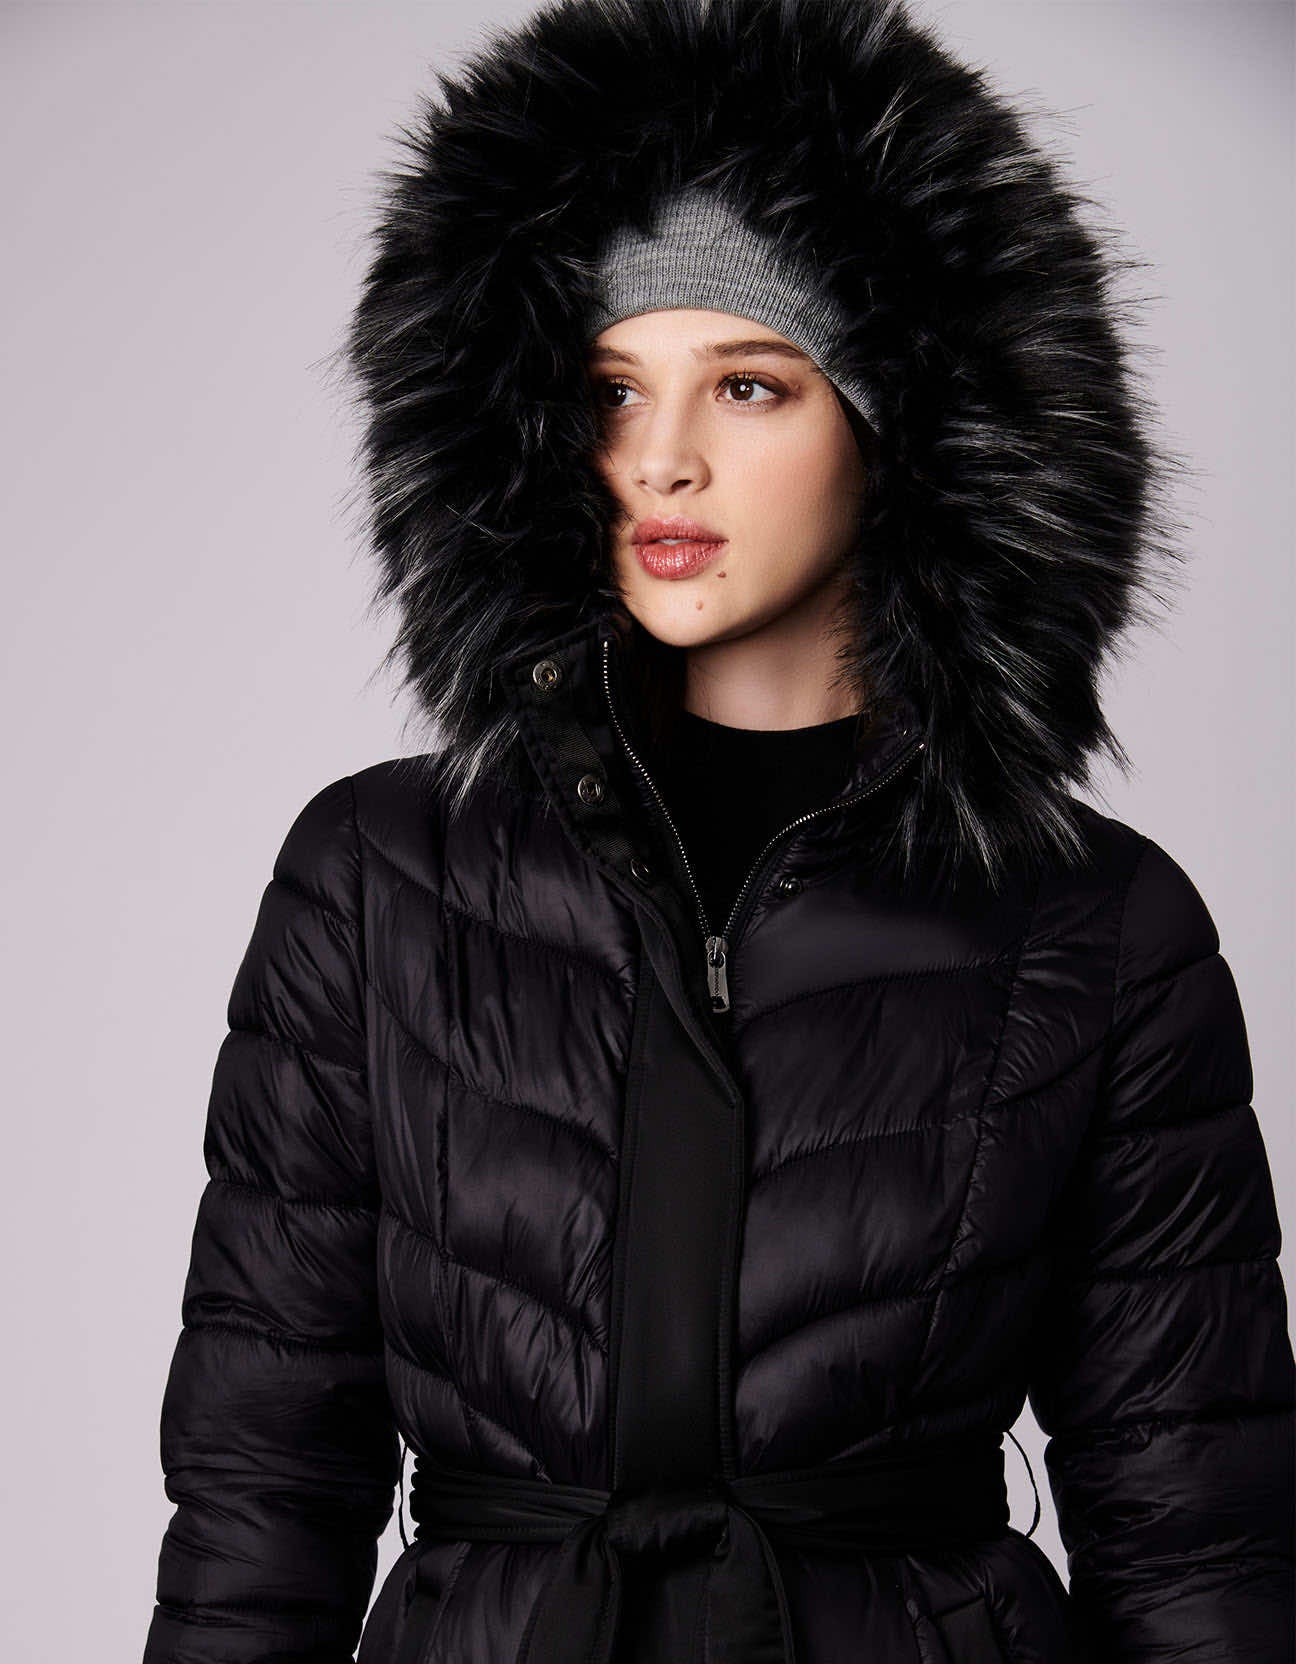 Bernardo Jetsetter Vegan Fur Trim Long Puffer Coat, Women's, Size: Small, Black